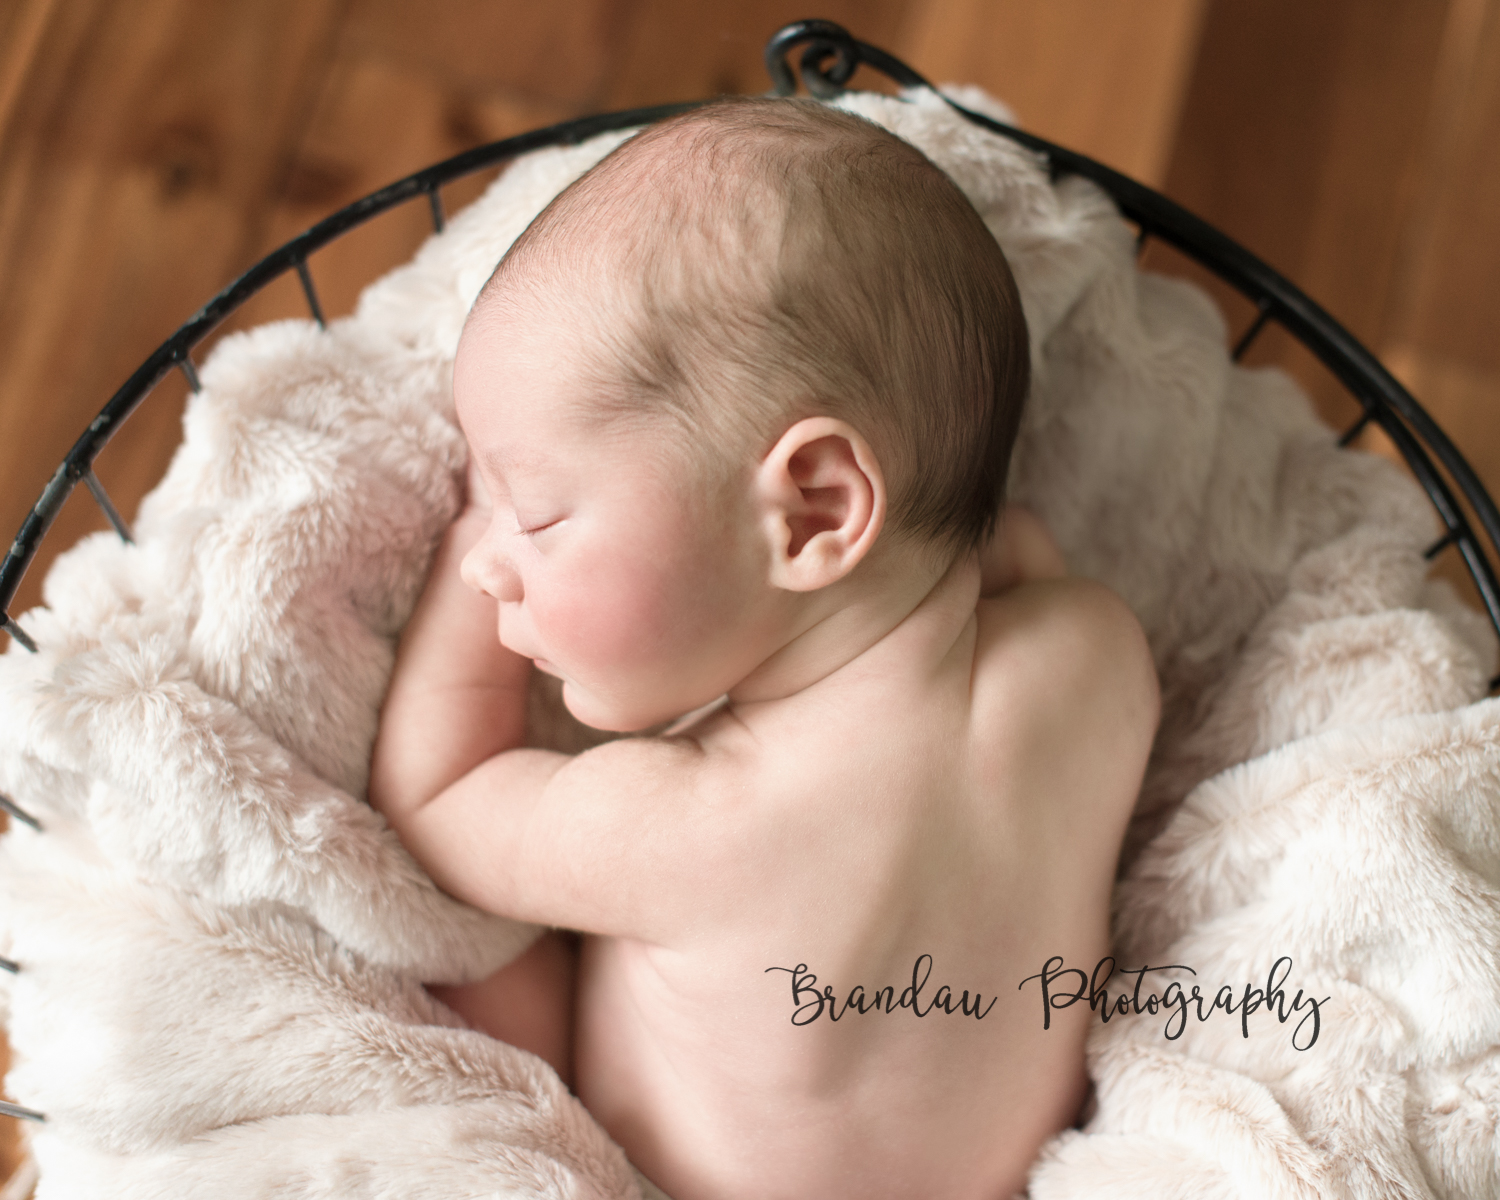 Brandau Photography - Central Iowa Newborn 050816-3.jpg